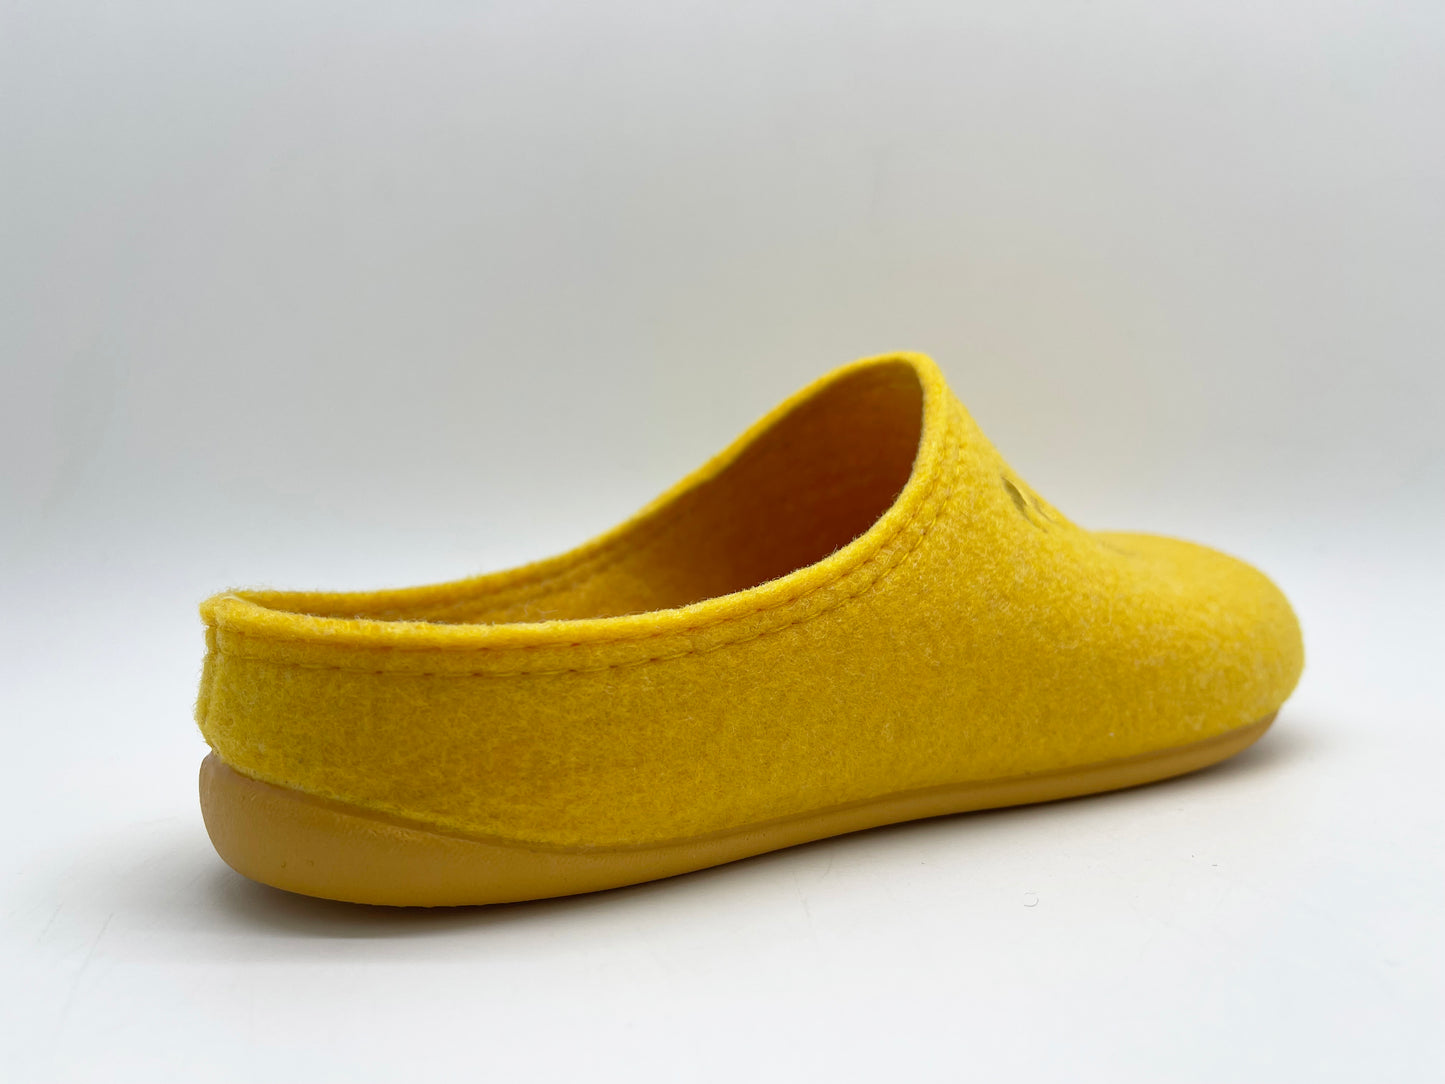 thies 1856 ® Recycled PET Slipper vegan yellow (W/X)